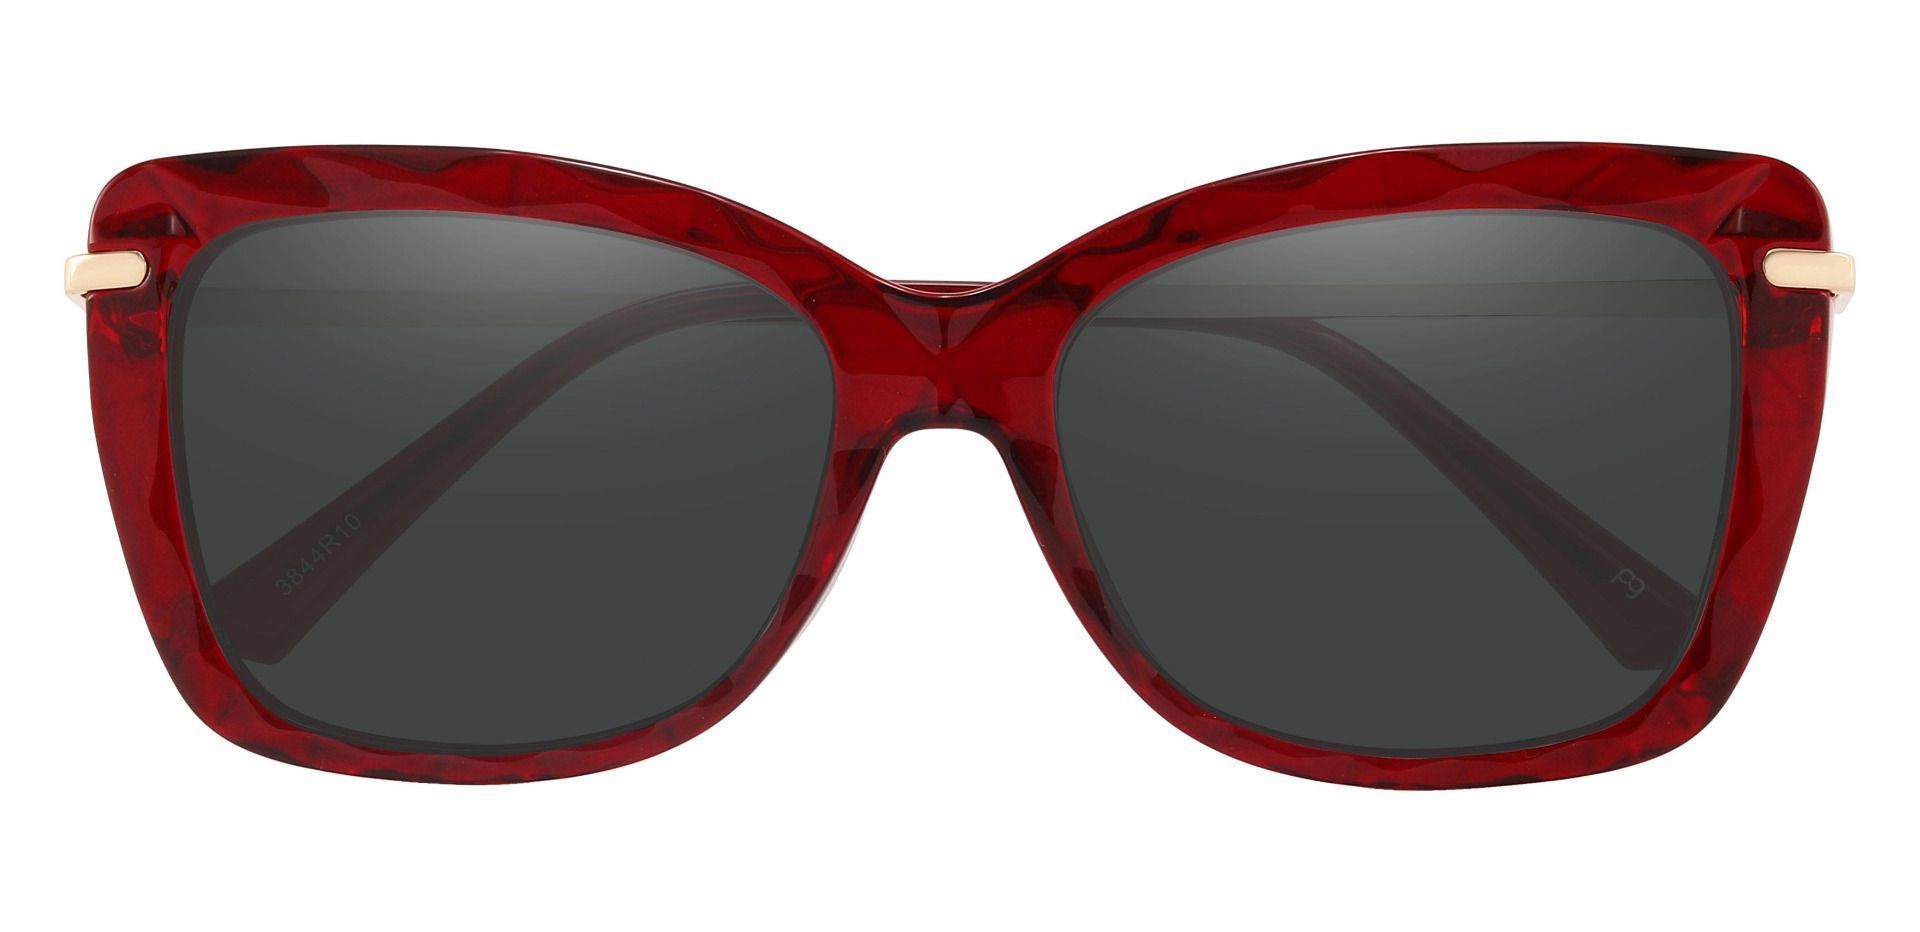 Shoshanna Rectangle Prescription Sunglasses - Red Frame With Gray Lenses